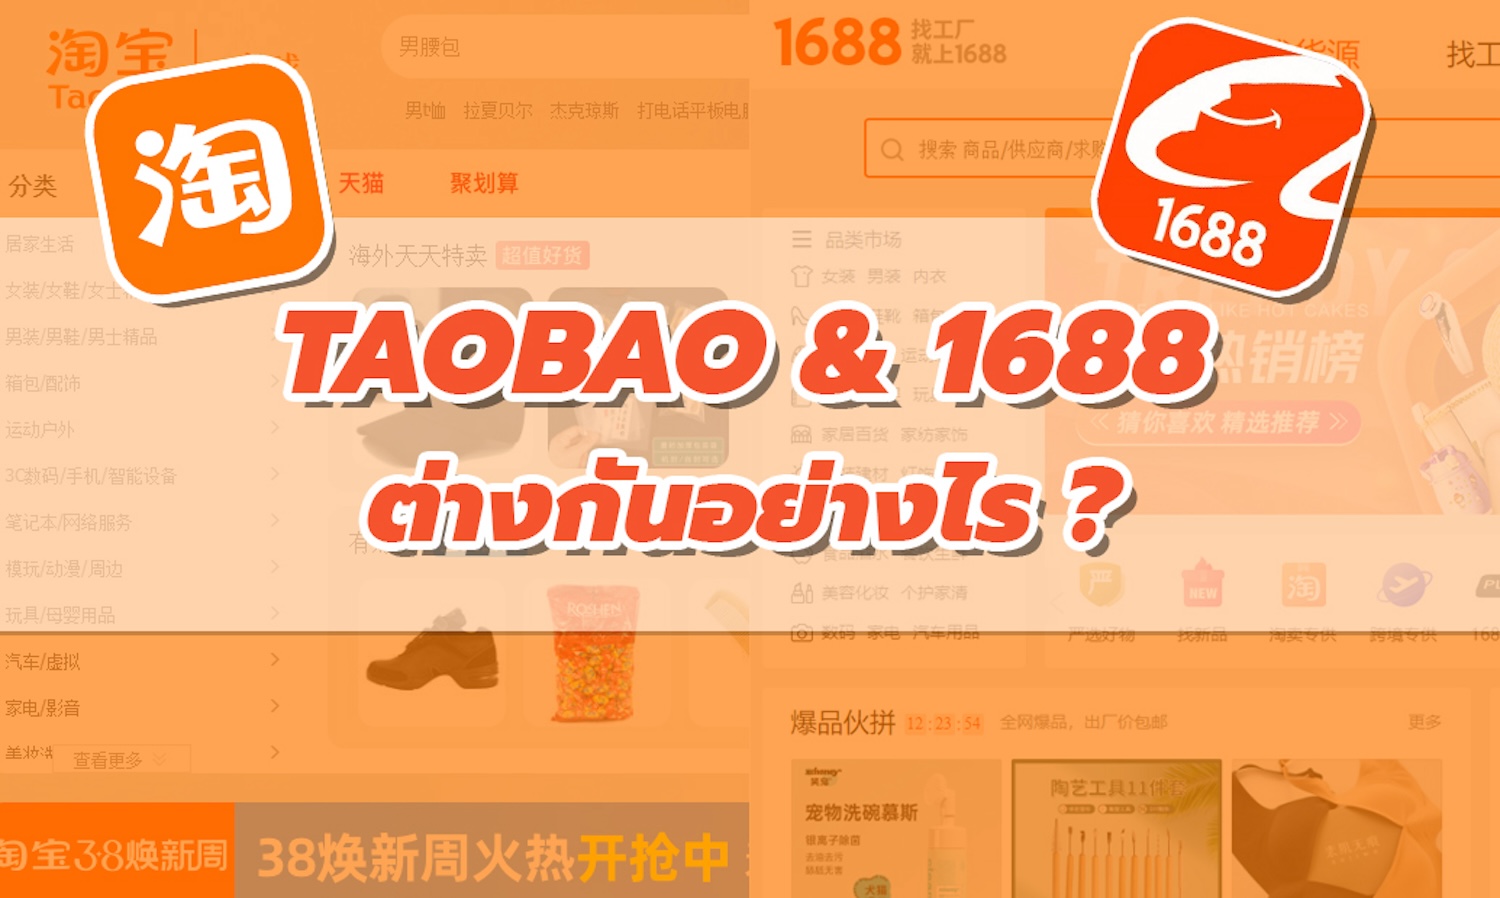 Taobao กับ 1688 ต่างกันอย่างไร ควรเลือกใช้บริการแพลตฟอร์มไหน?